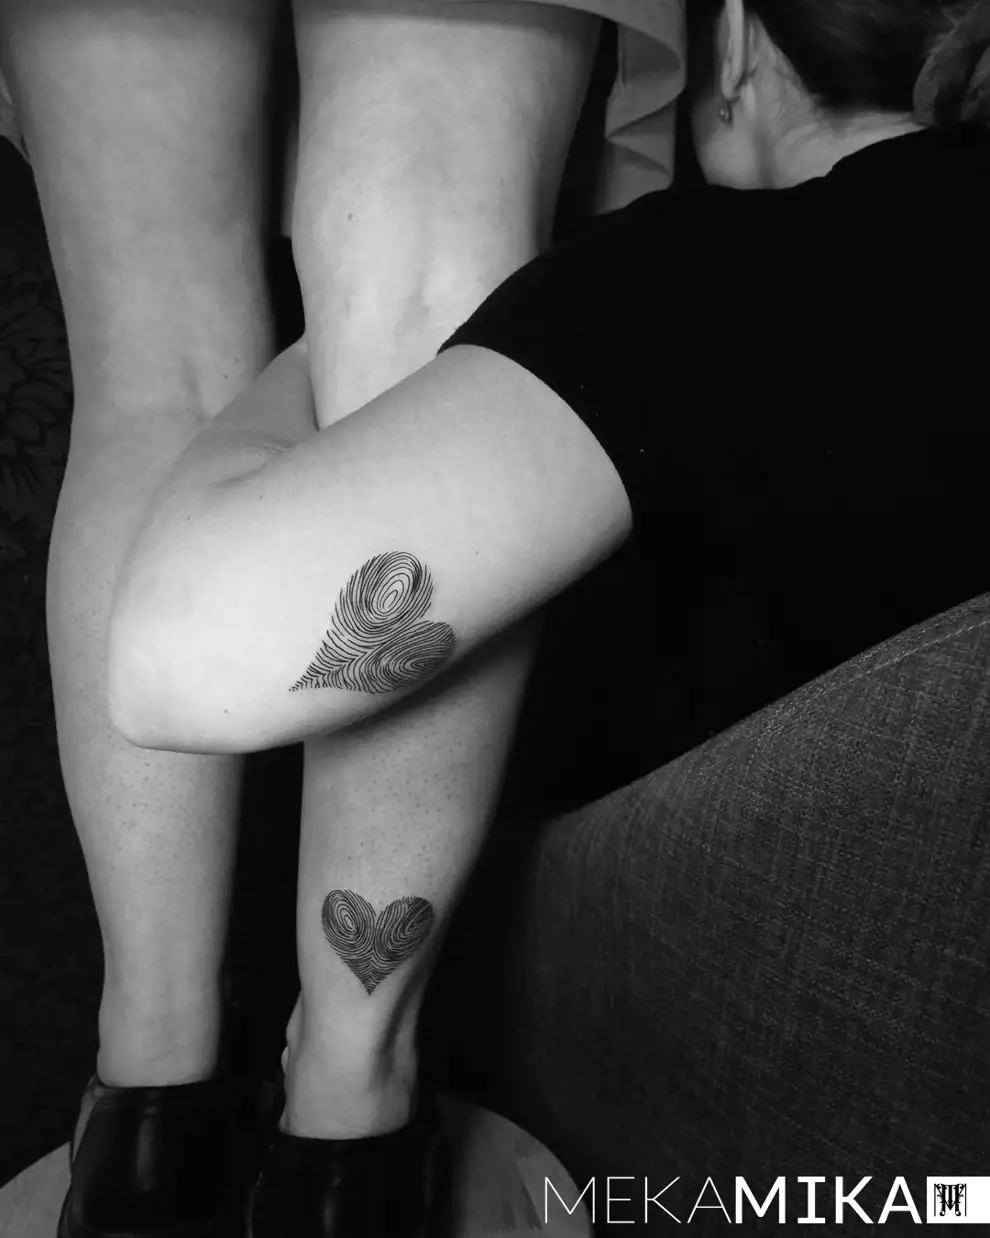 Tatuajes madre e hija originales: huellas